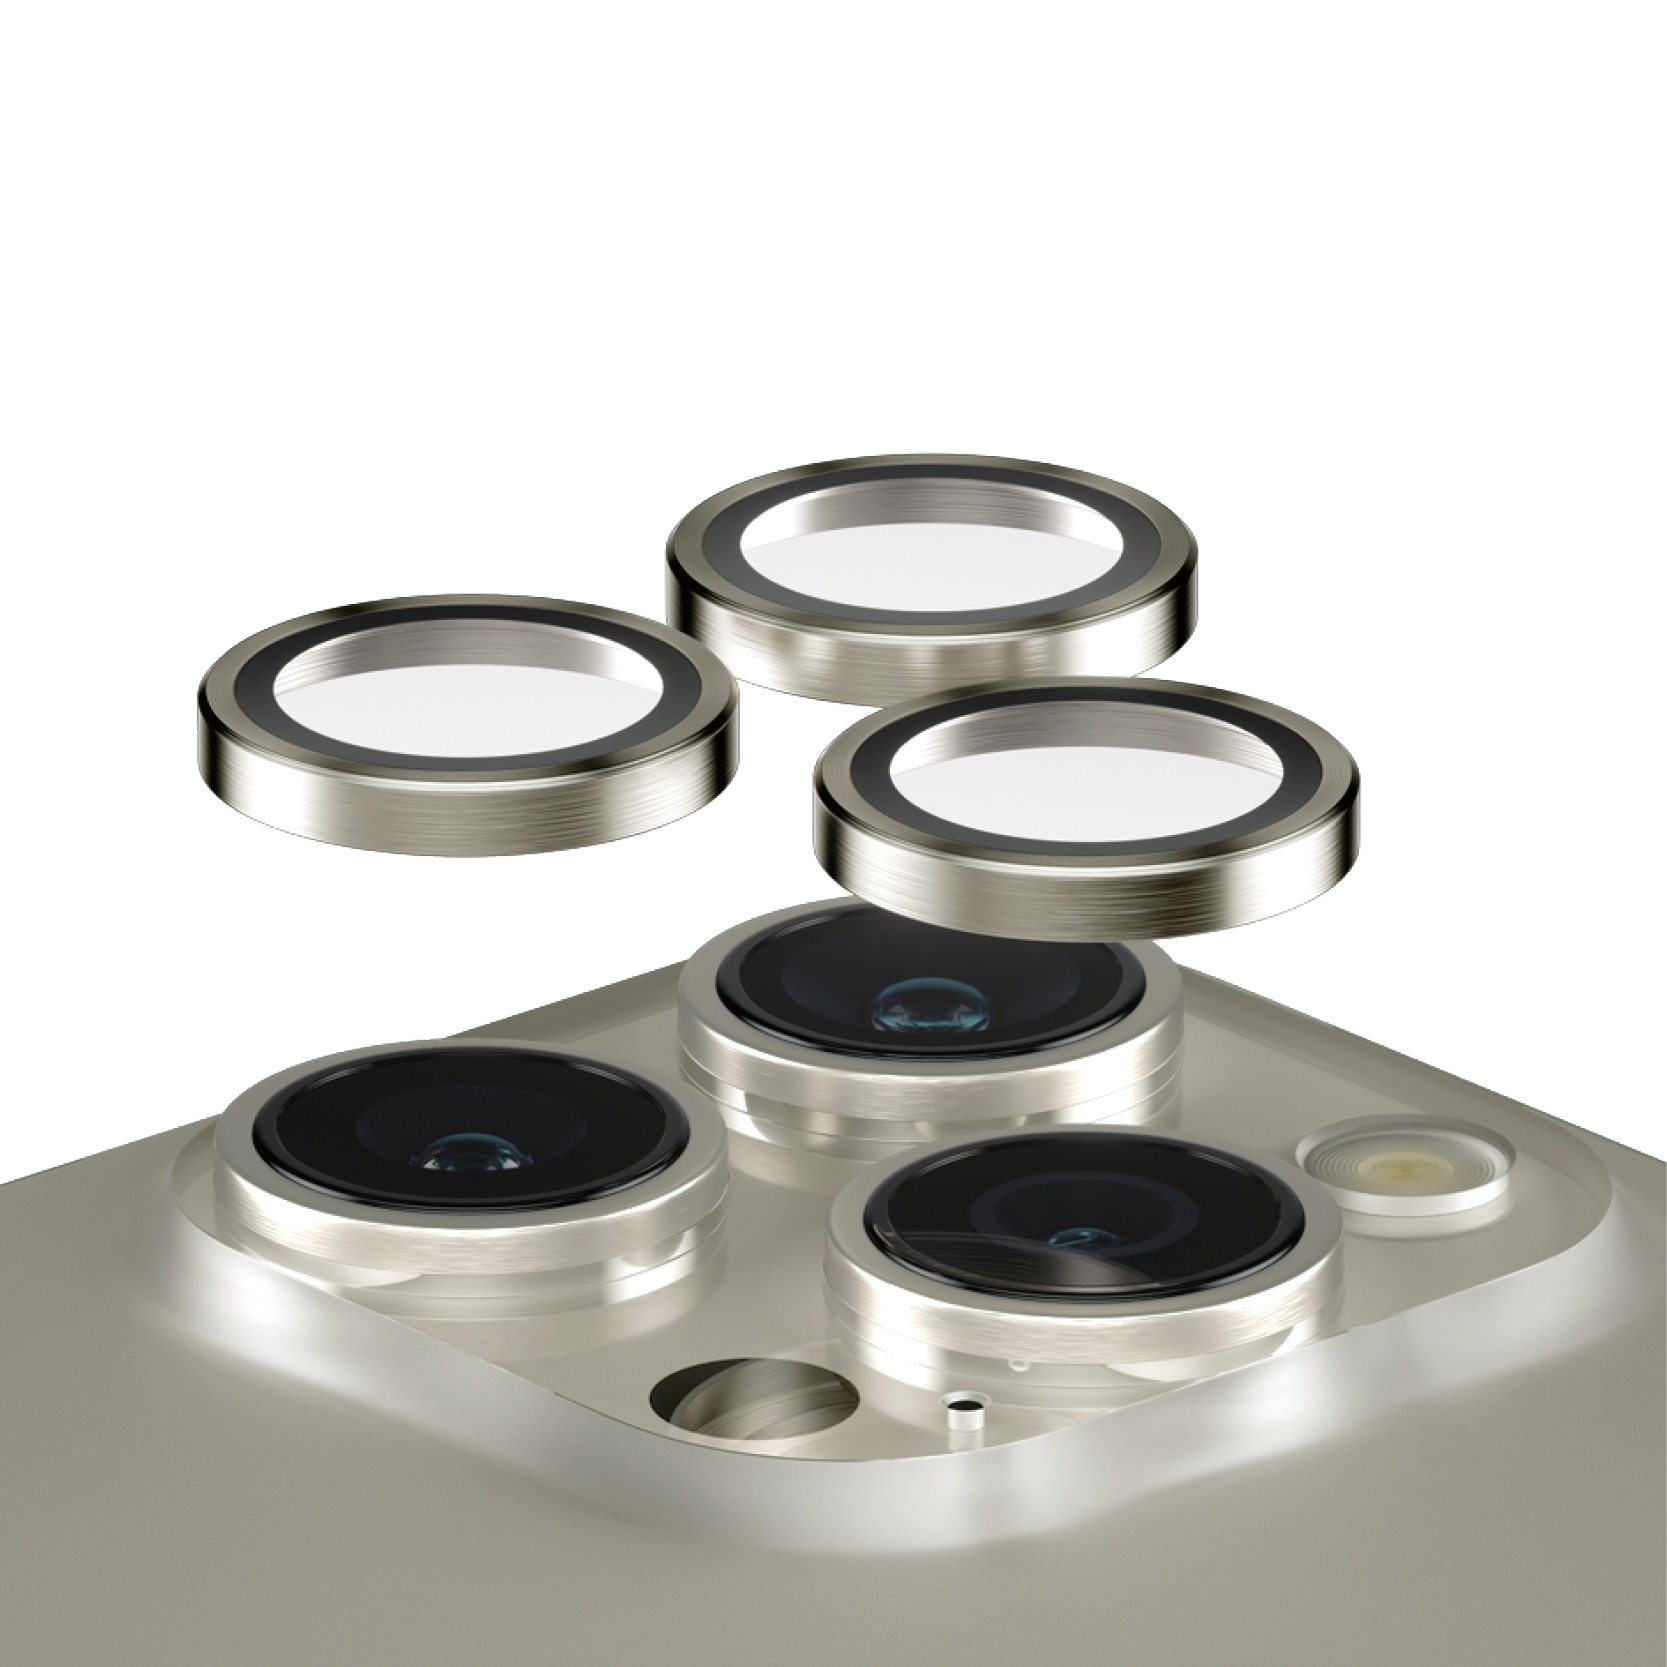 iPhone 15 Pro Hoops Camera Lens Protector, Natural Metal